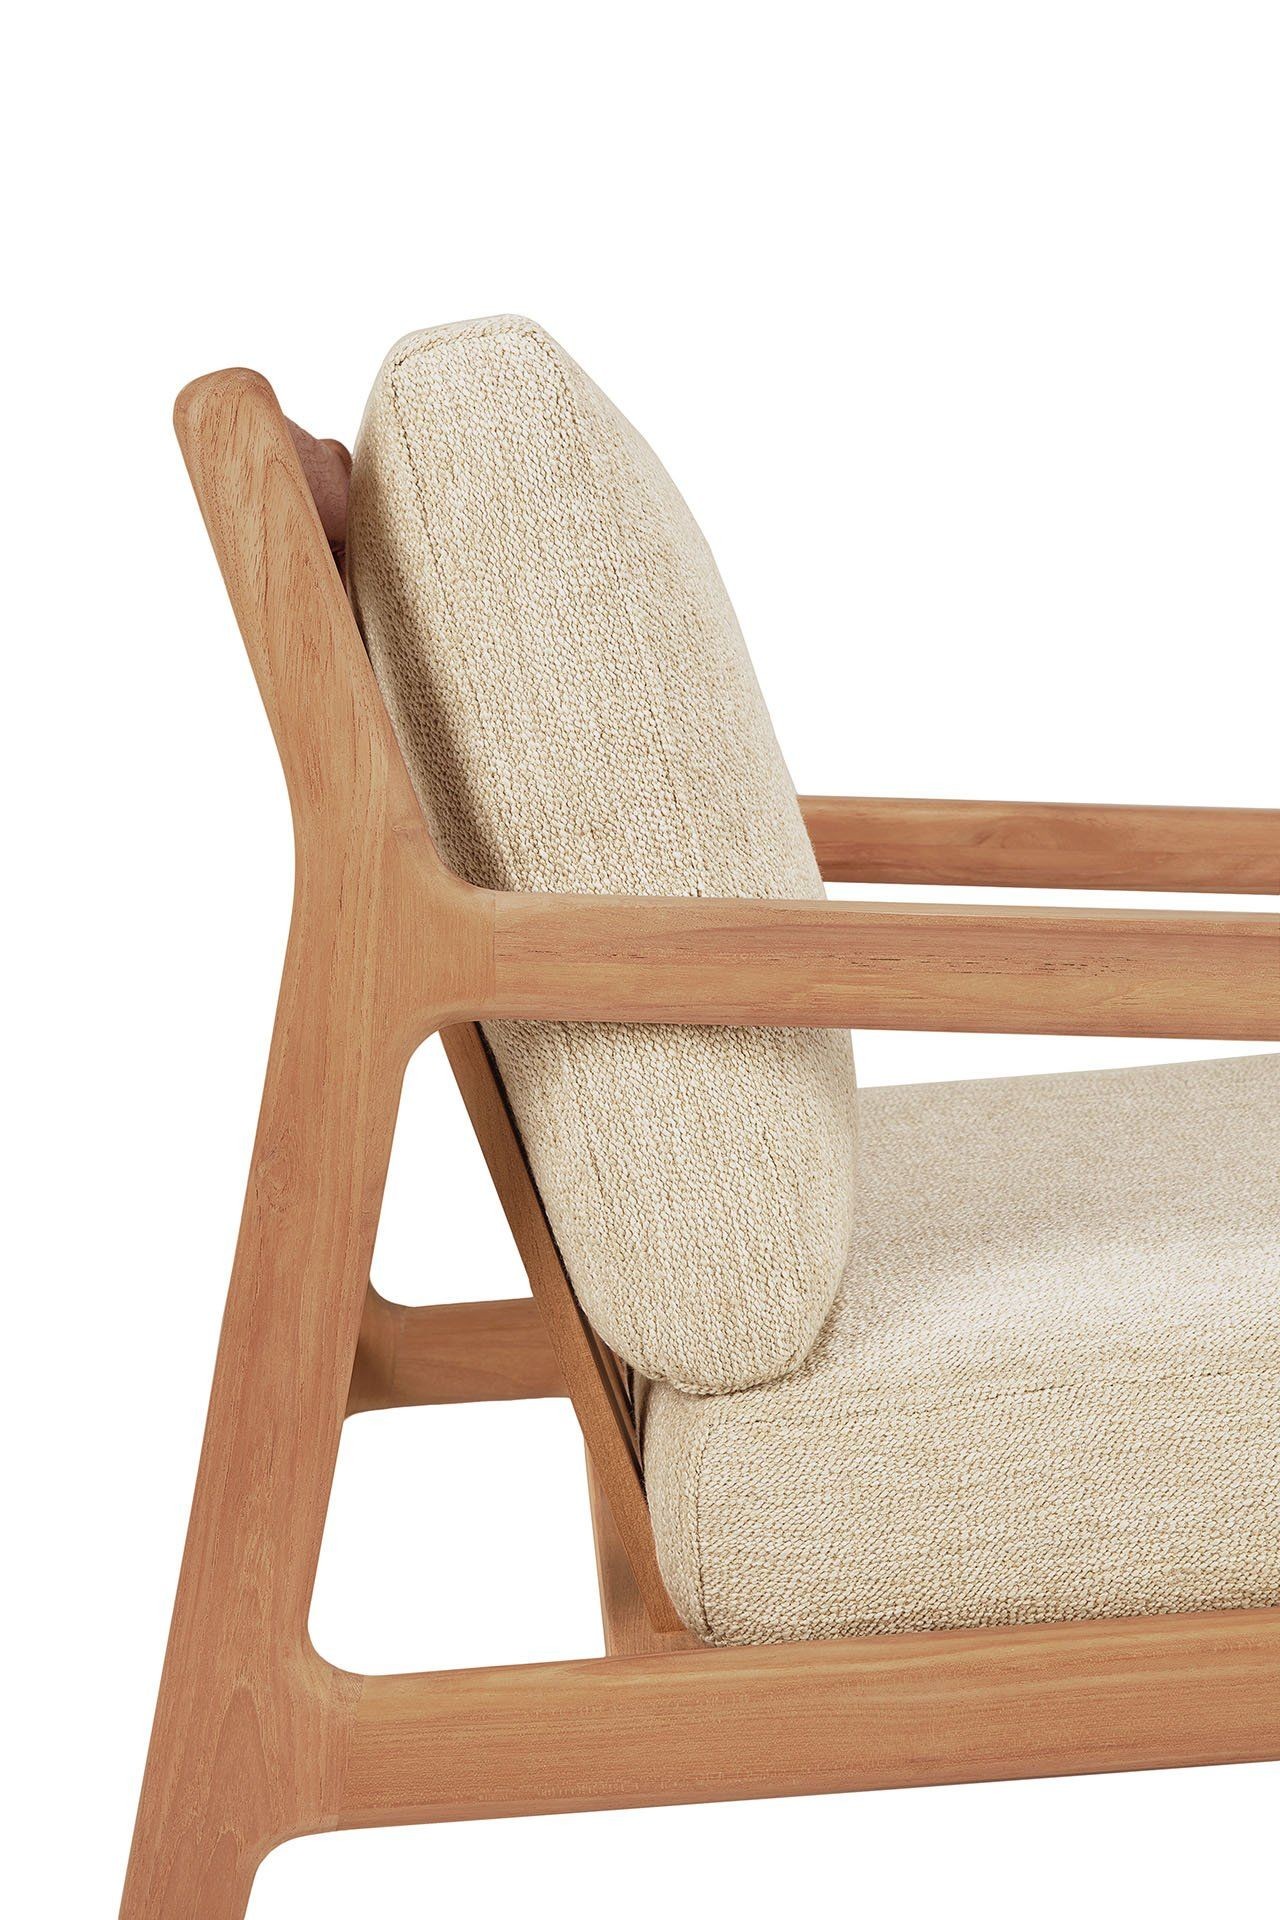 Ethnicraft Teak Jack Outdoor Lounge Chair - 76 cm - Natural--38